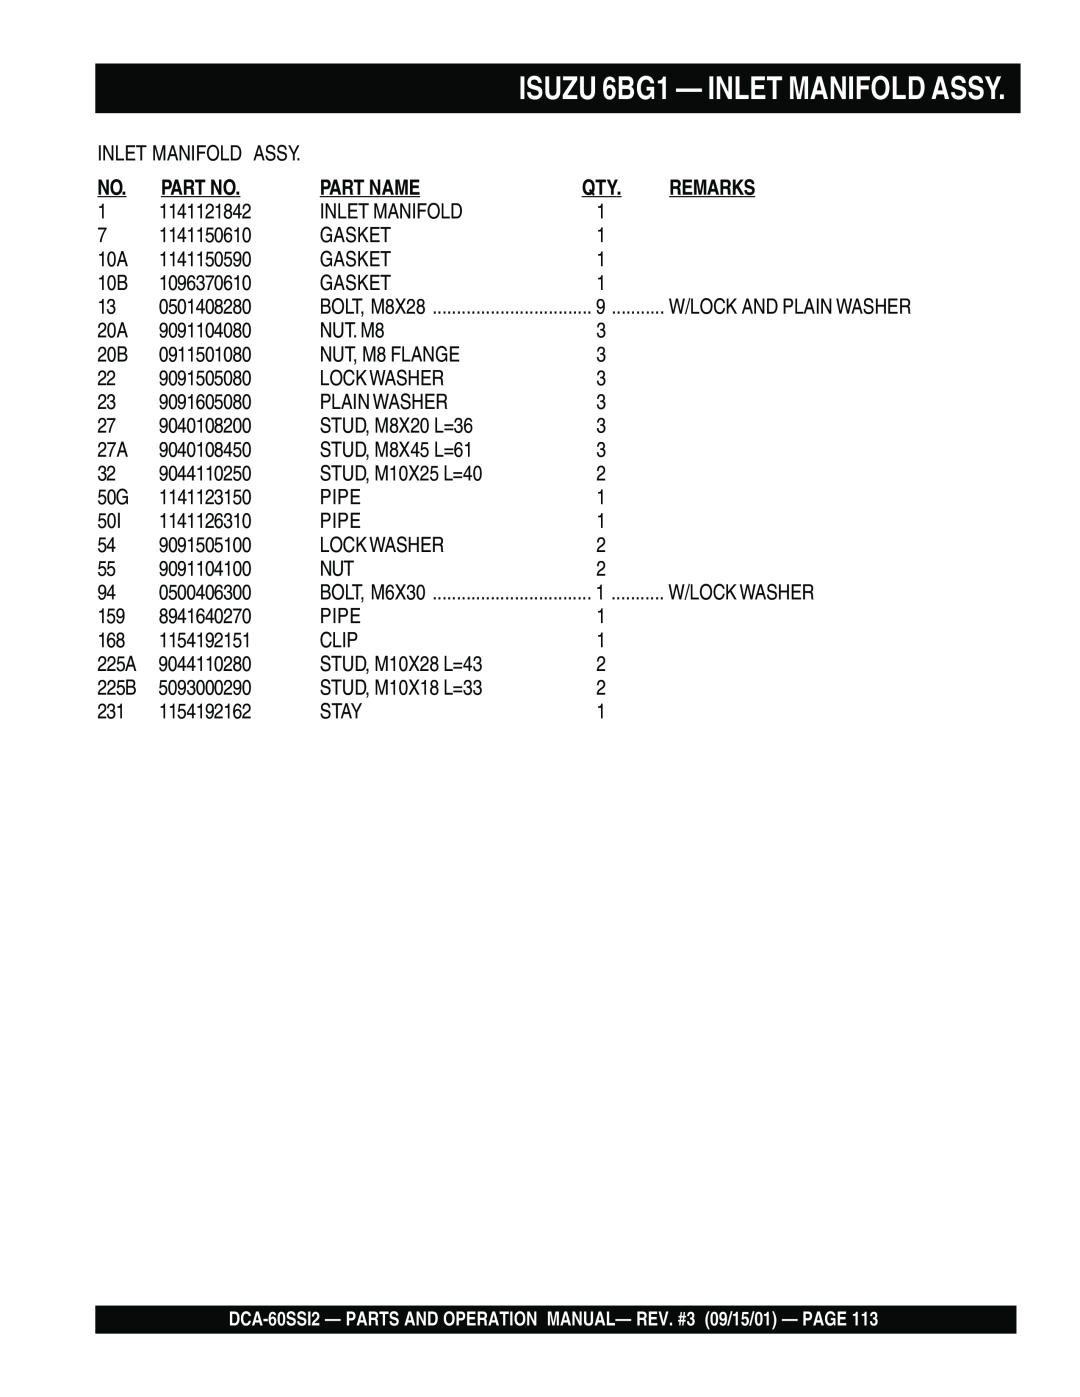 Multiquip DCA-60SS12 operation manual ISUZU 6BG1 — INLET MANIFOLD ASSY, Part No, Part Name, Remarks 